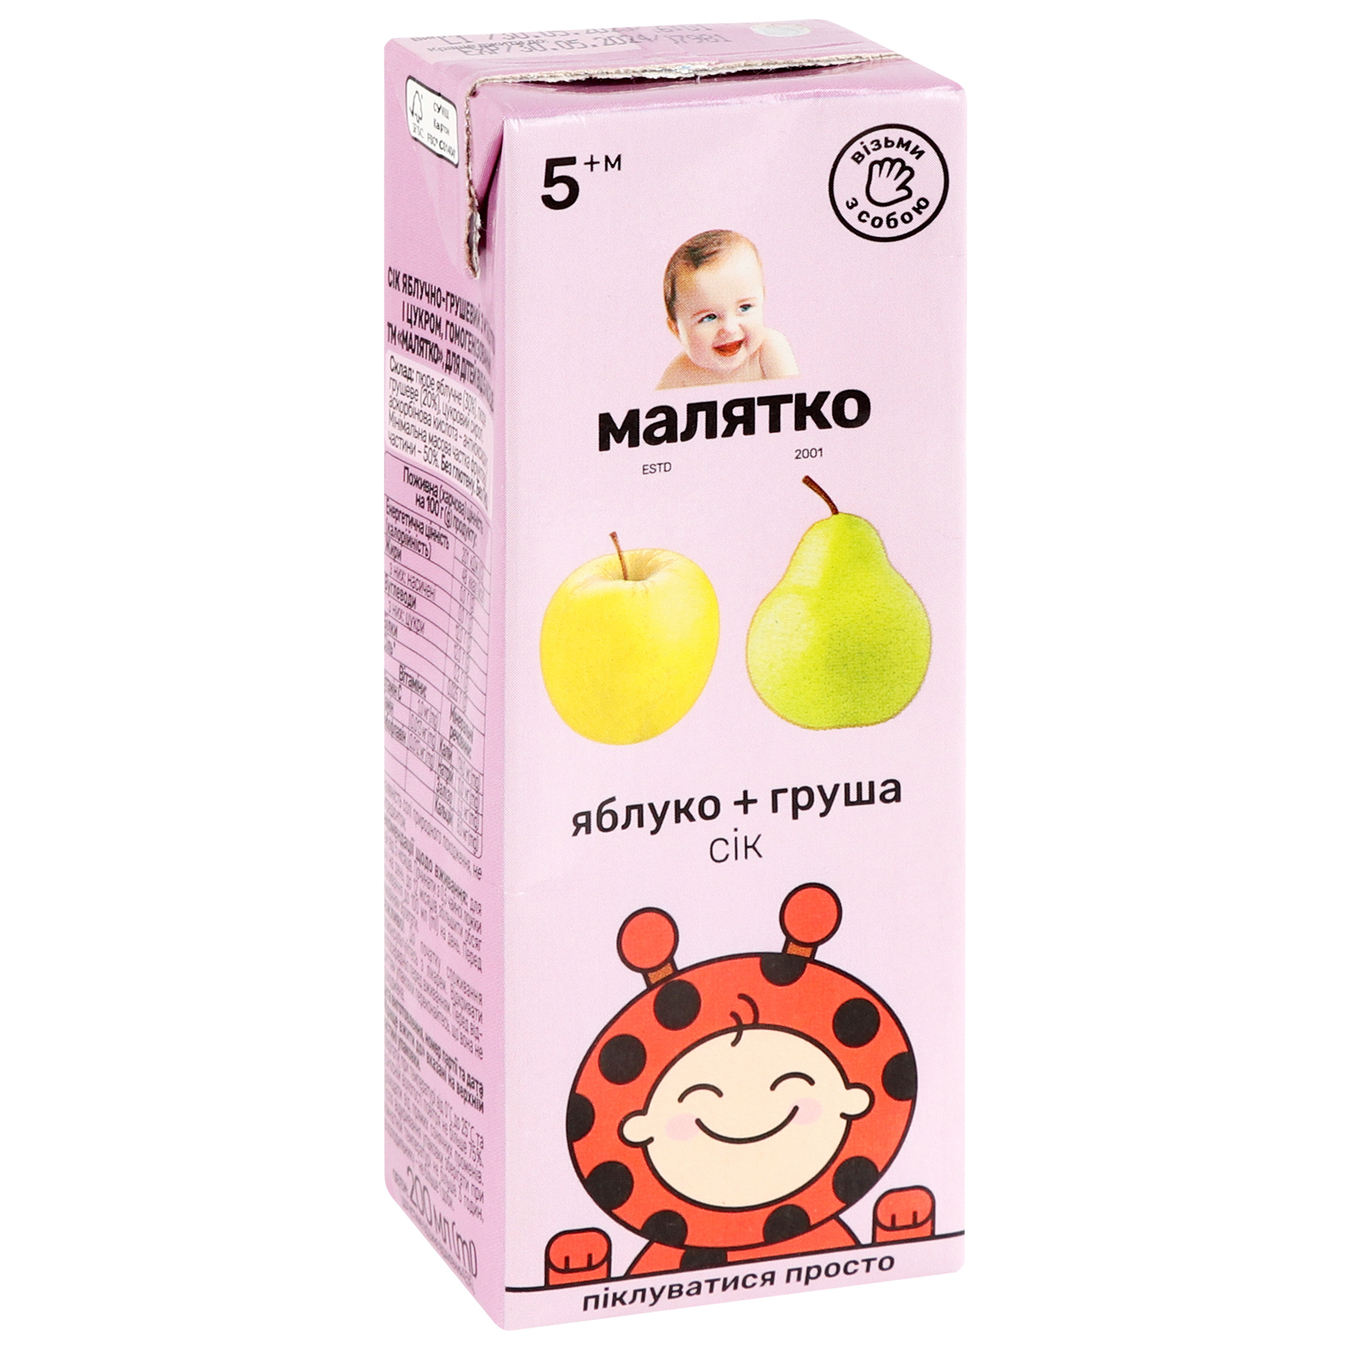 Malytko apple-pear juice 200g 4